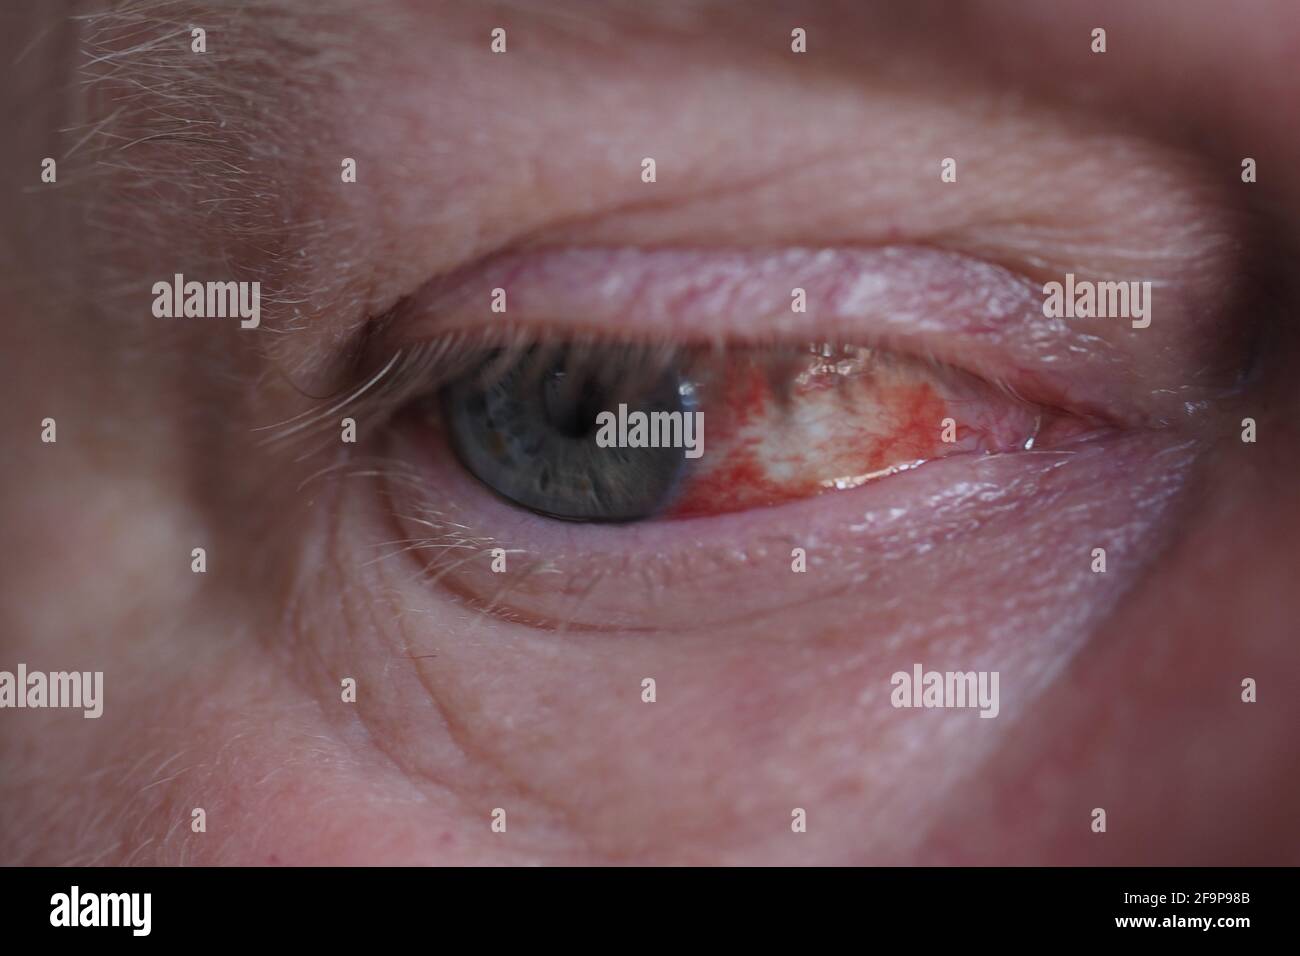 A man's eye. It's a macro- Eye disease, hemorrhage in the eye. Stock Photo